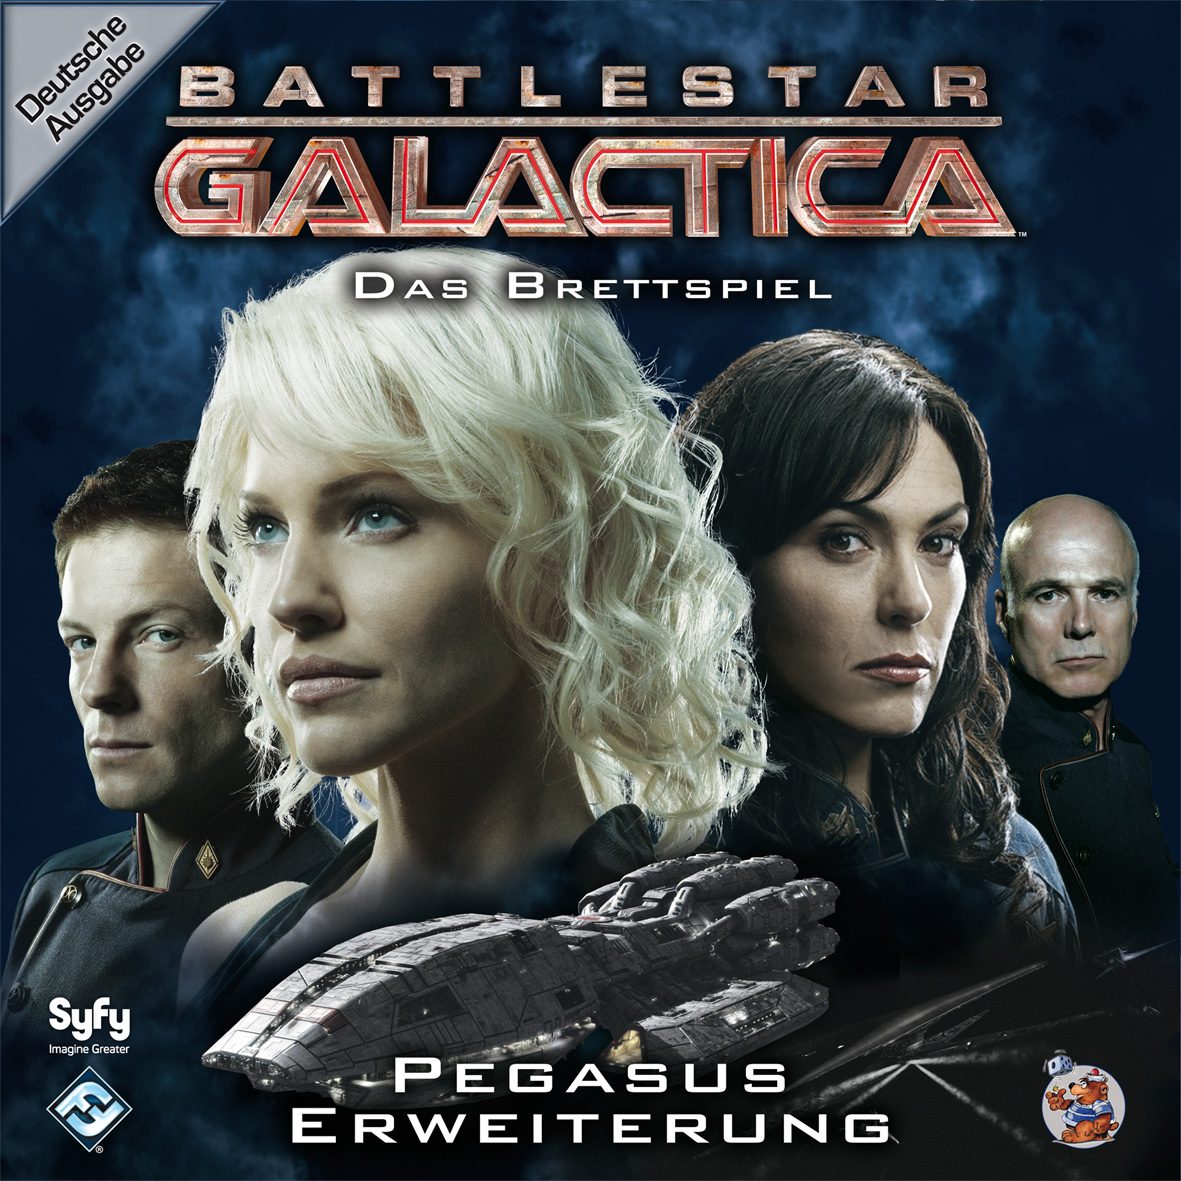 Battlestar Galactica: Pegasus Erweiterung wieder verfügbar